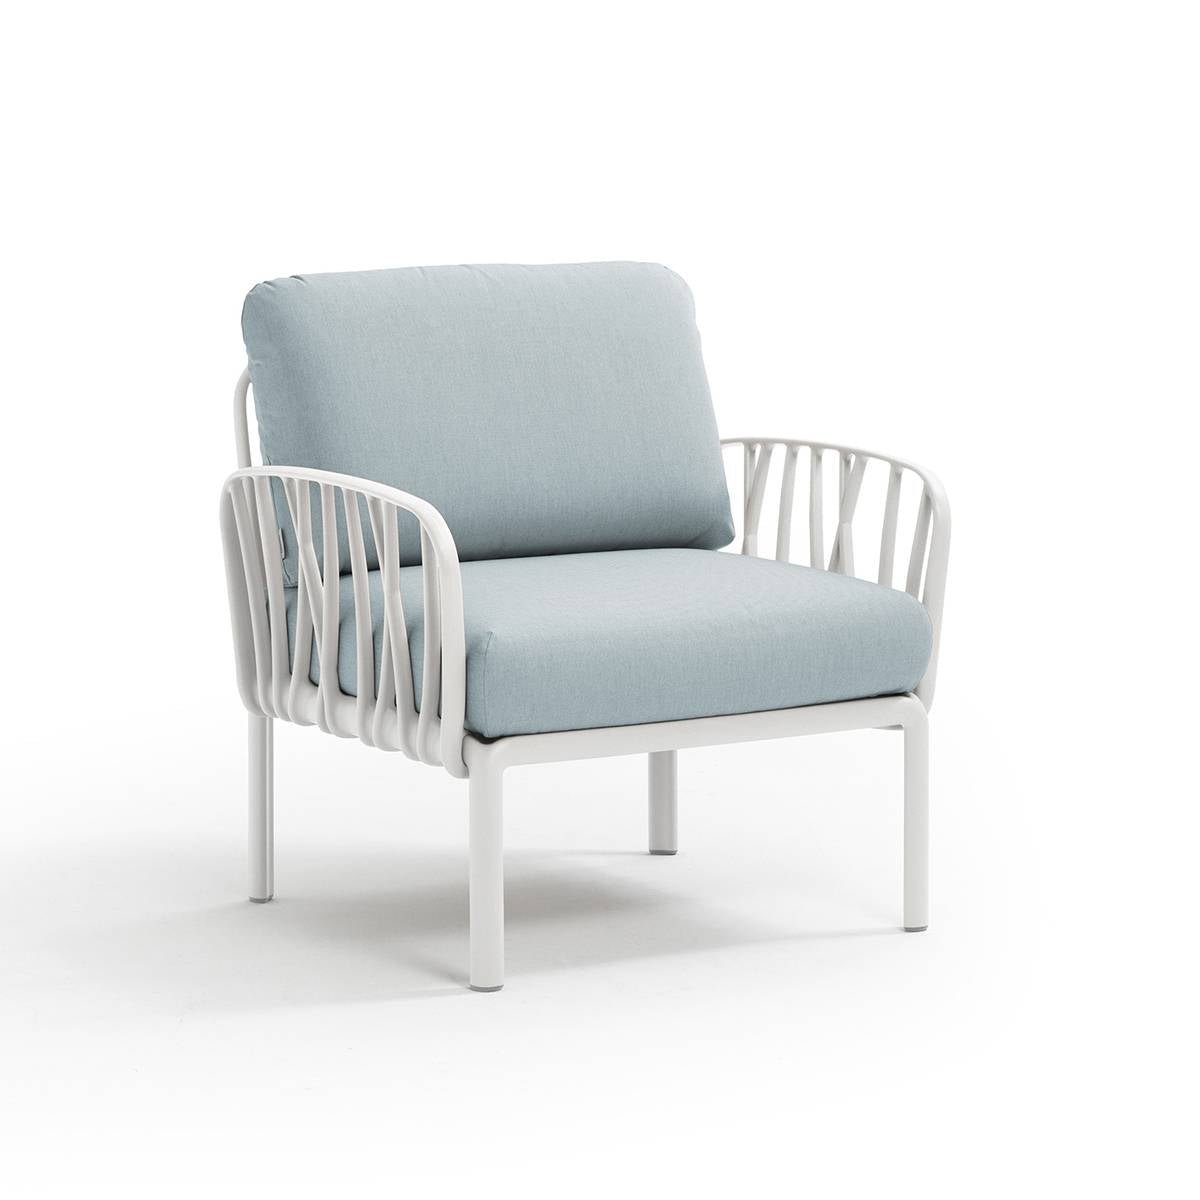 Komodo armchair in fiberglass resin - Nardi